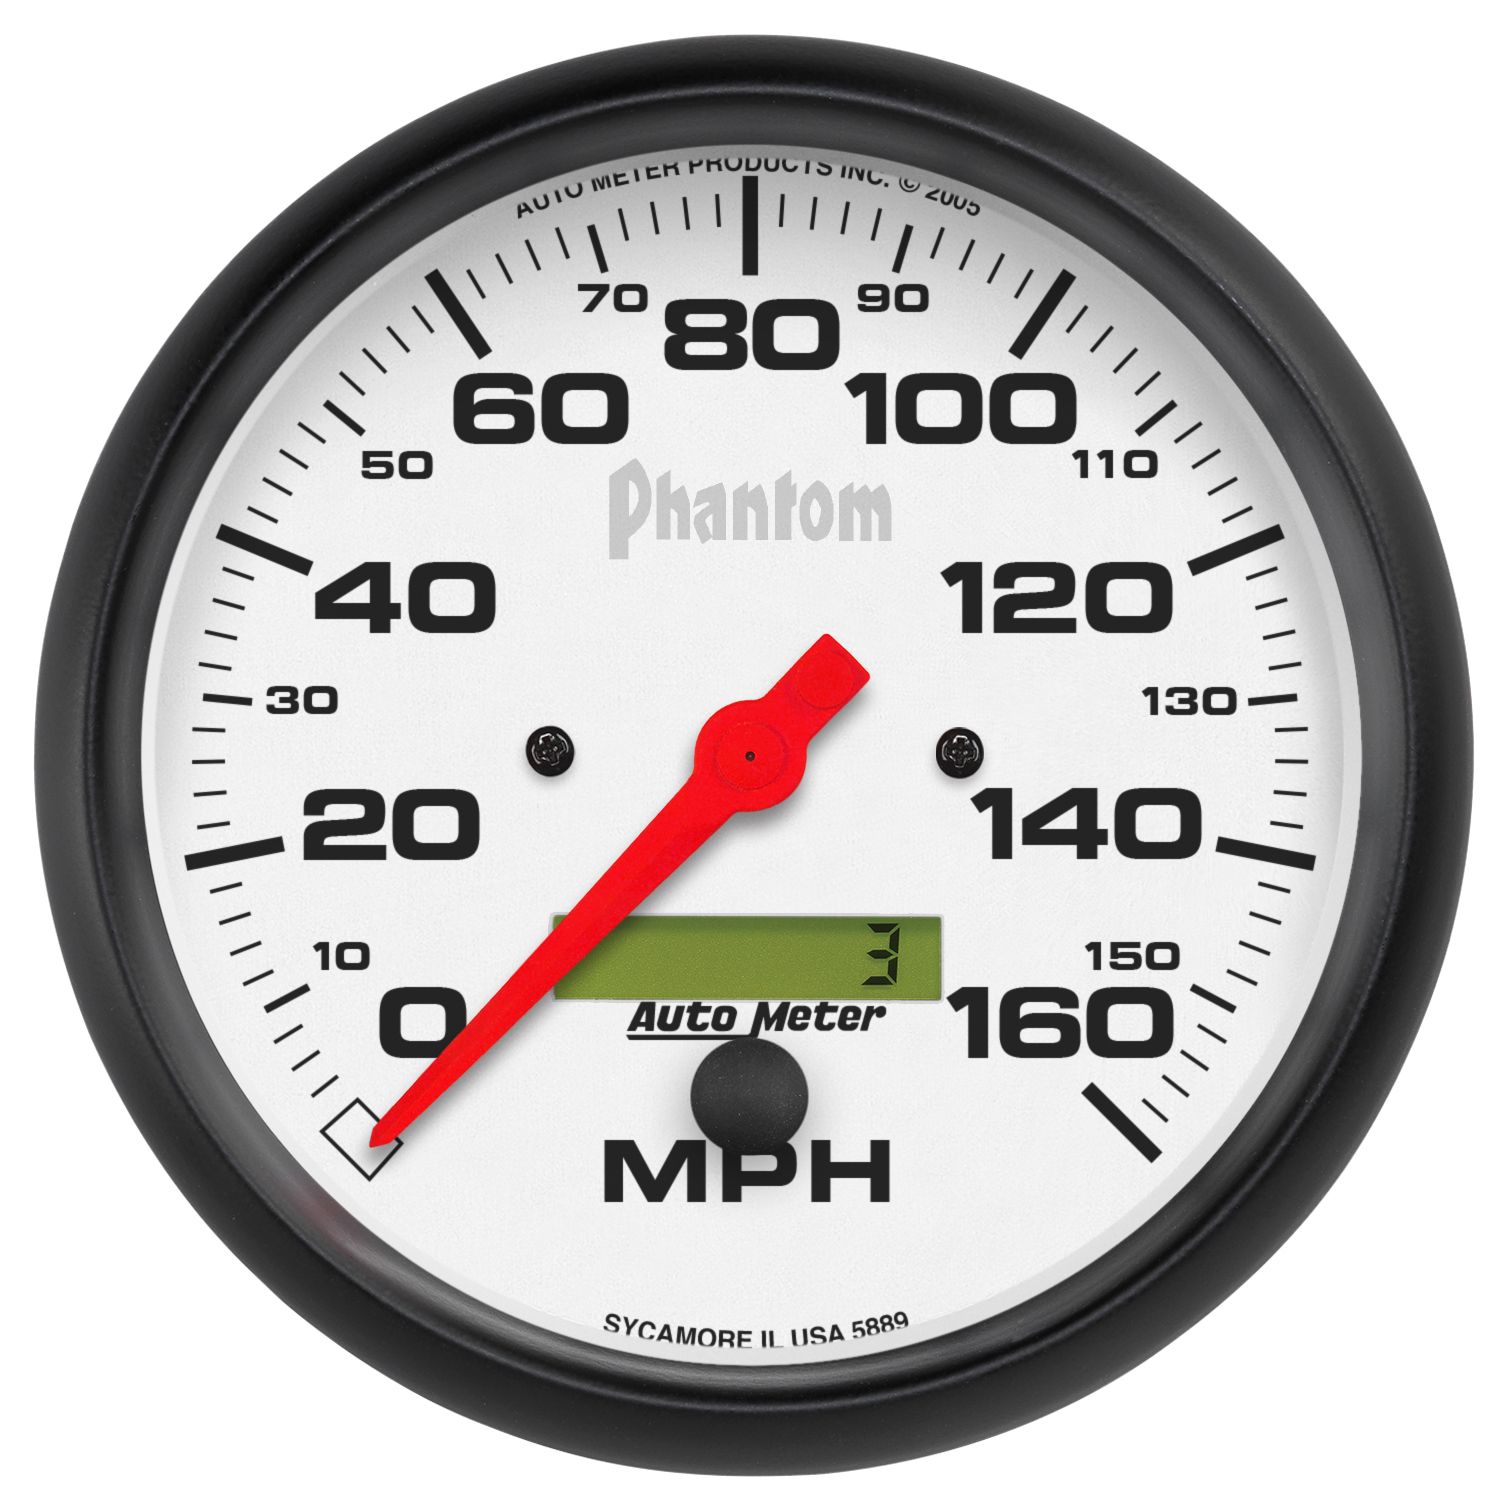 GPS Box Make your mechanical speedometer a GPS speedometer